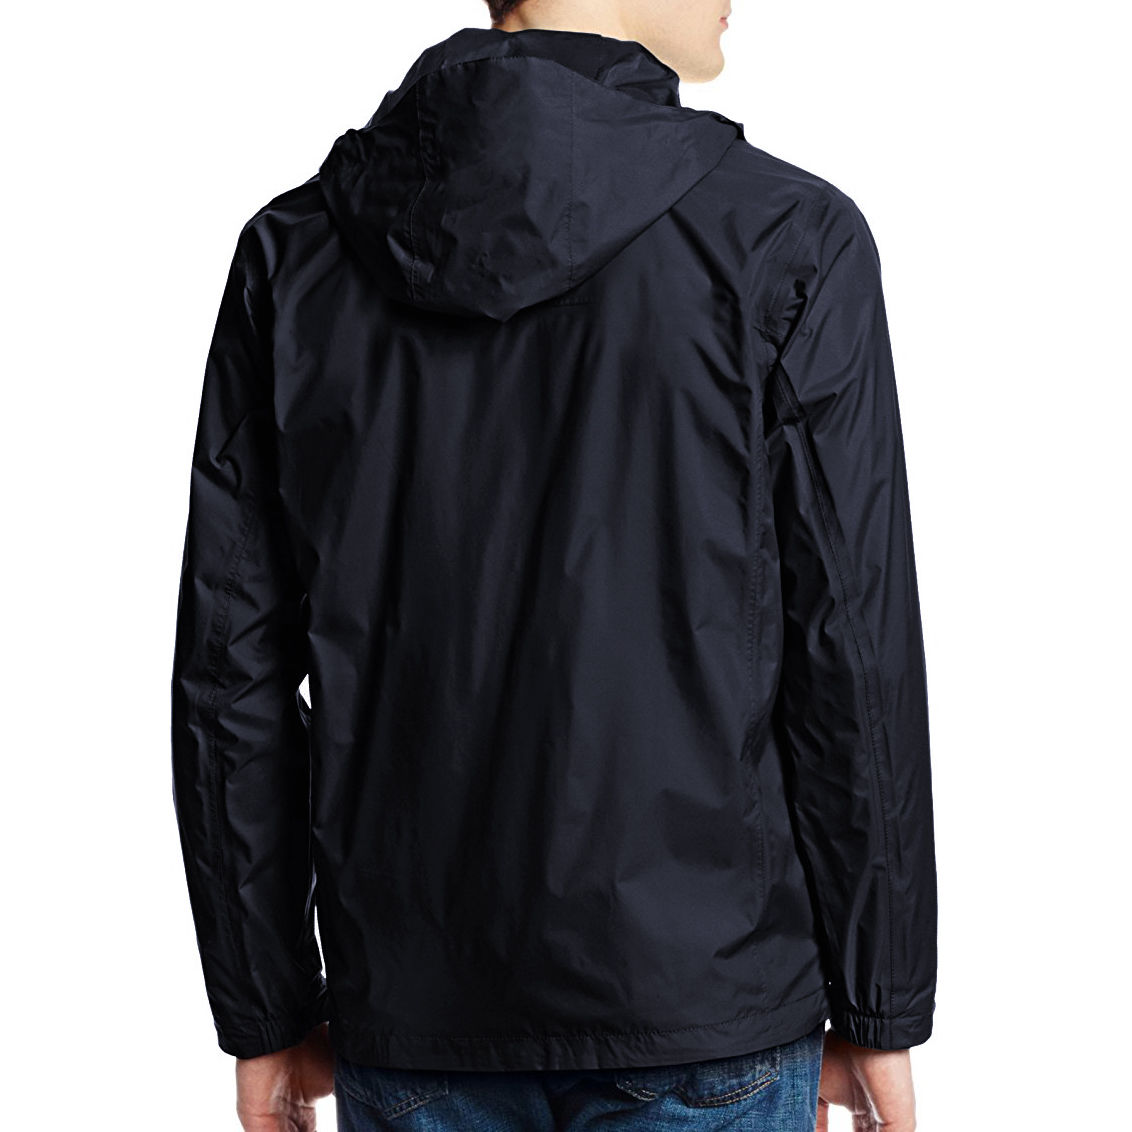 Men's Water Resistant Zip Up Hooded Lightweight Windbreaker Rain Jacket (Navy Blue,L) - image 3 of 3